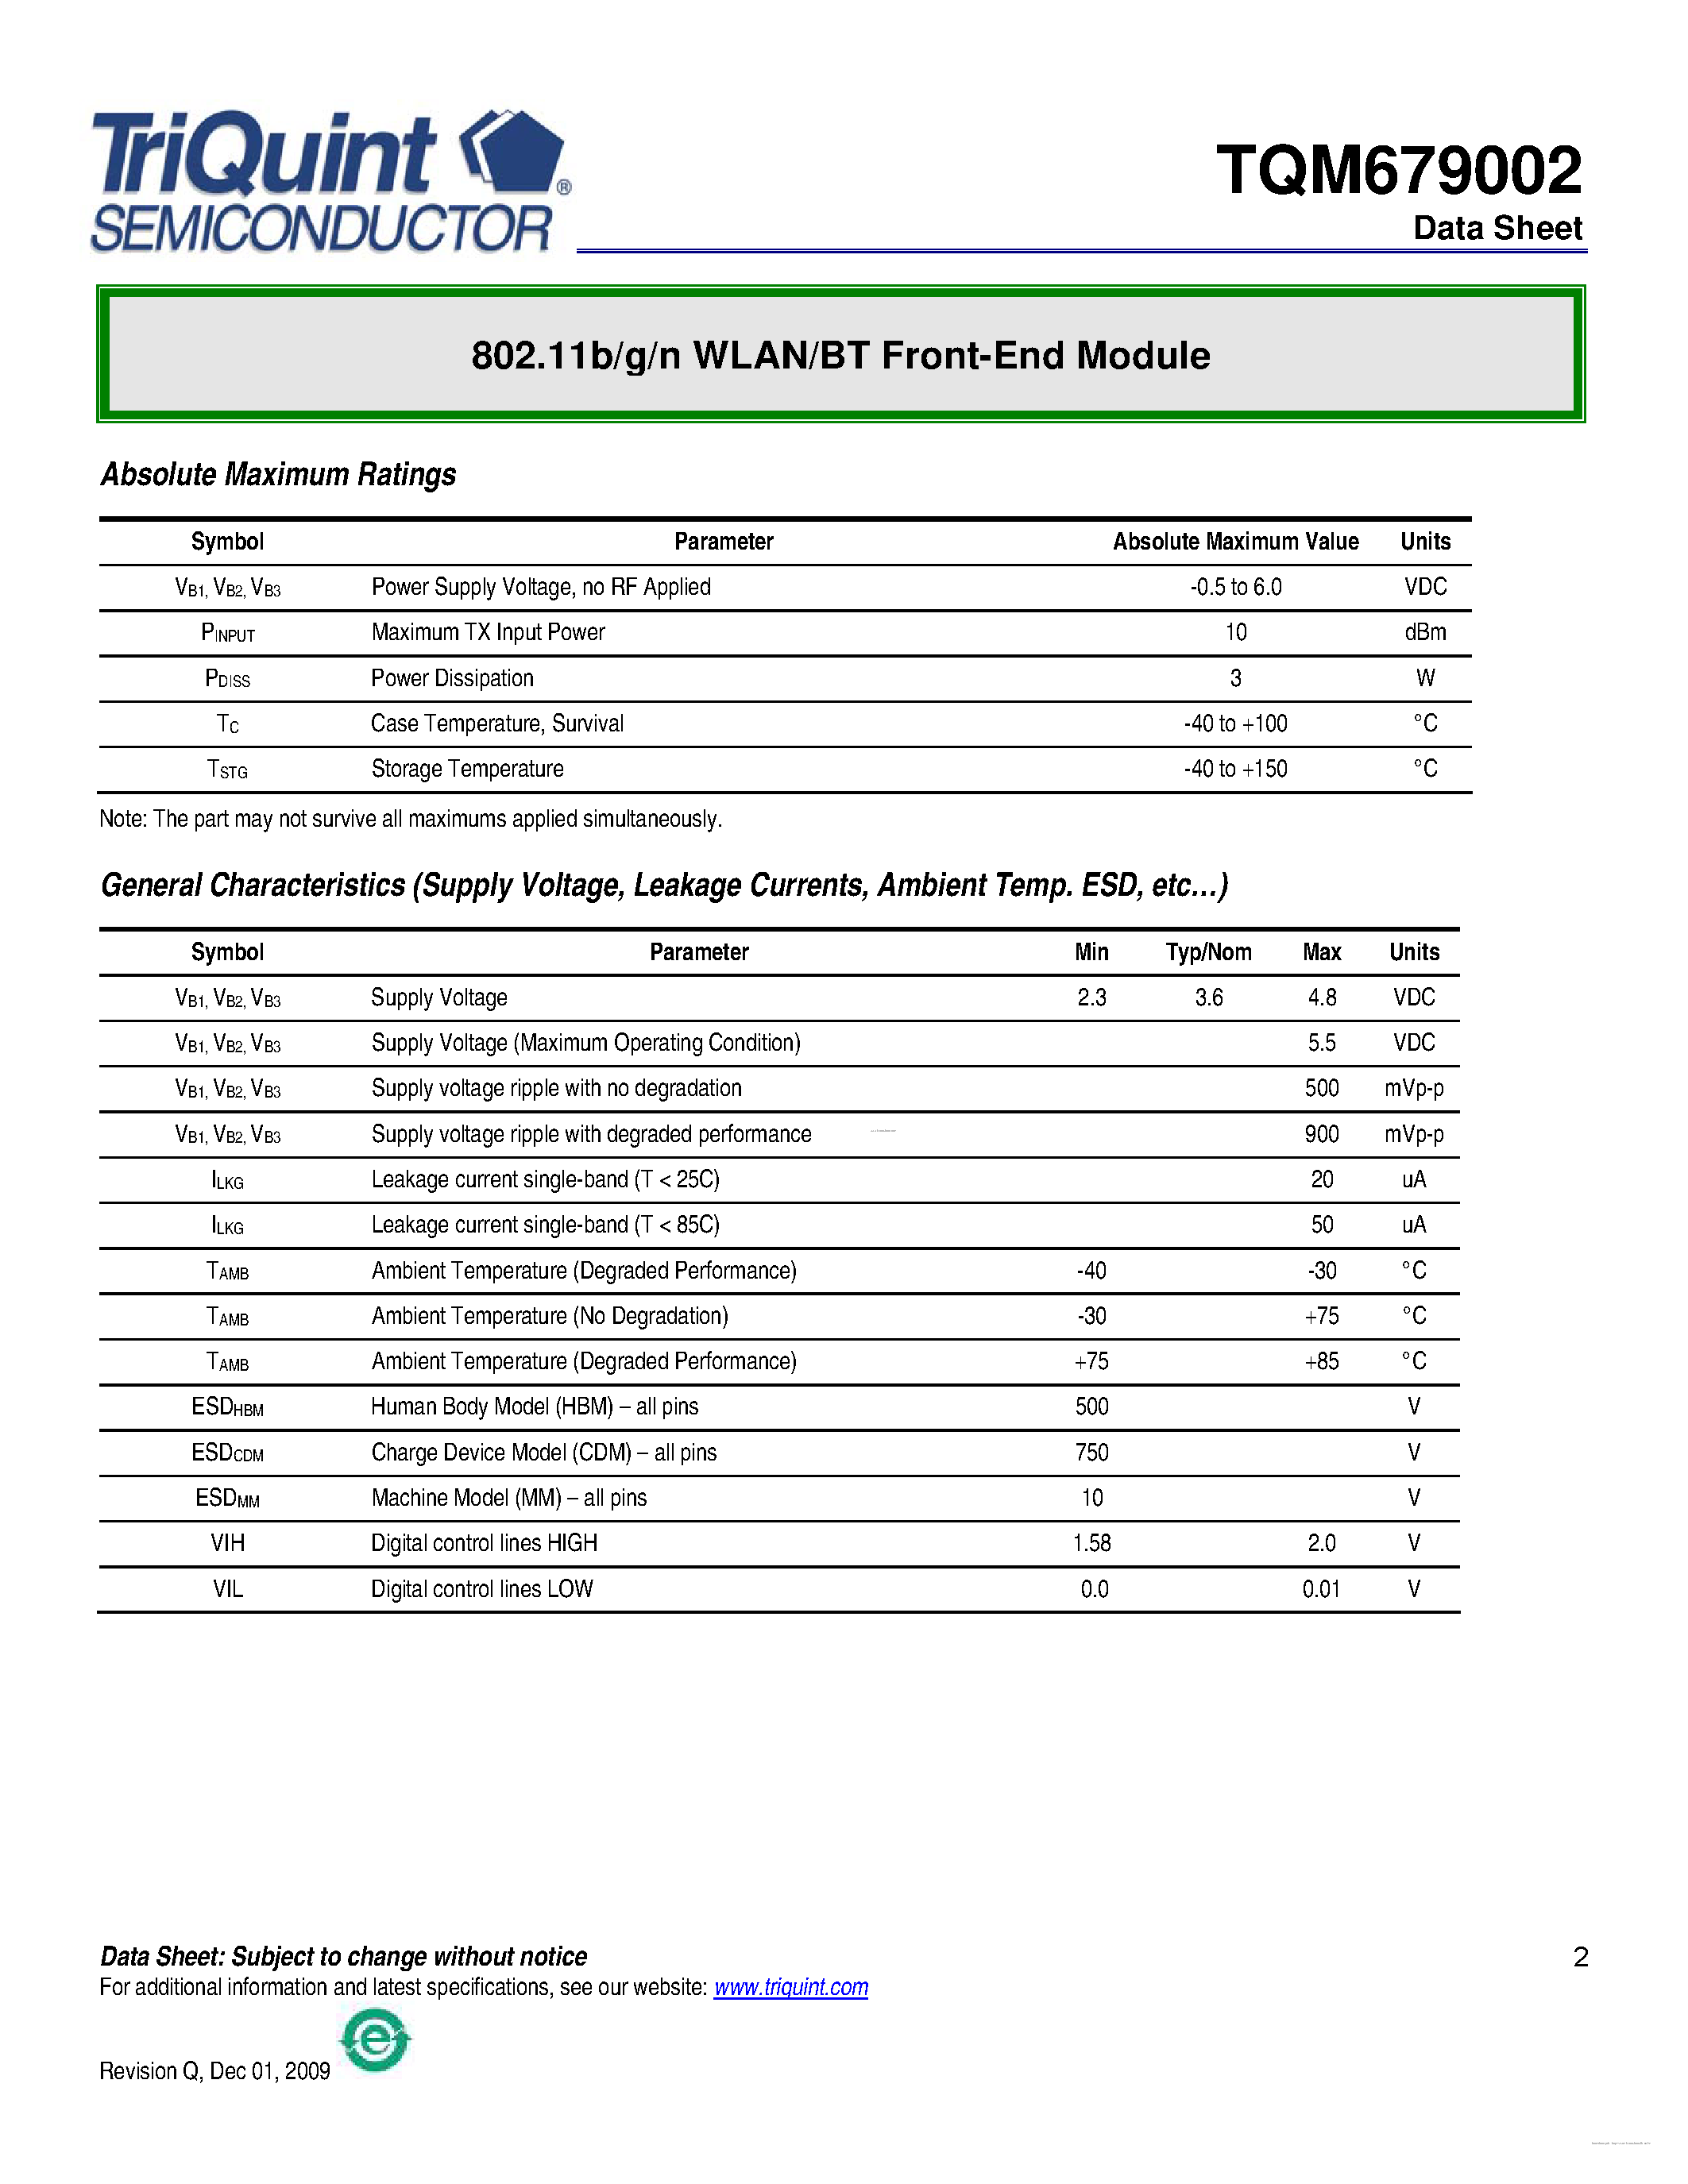 Datasheet TQM679002 - 802.11b/g/n WLAN/BT Front-End Module page 2